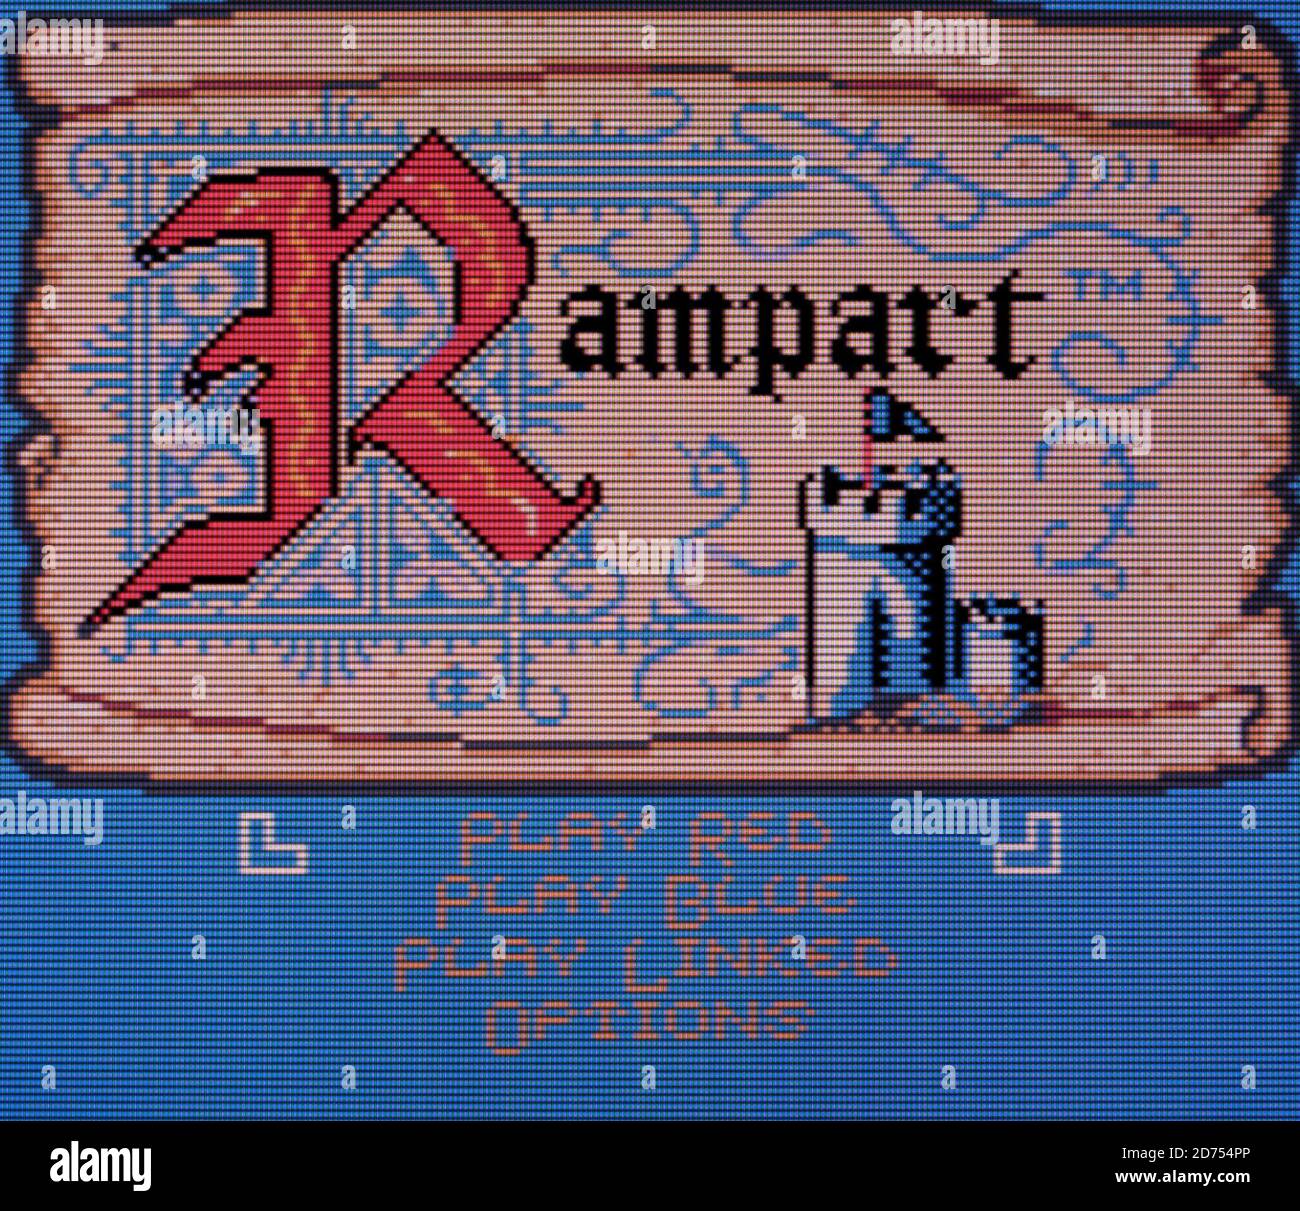 Rampart - Nintendo Game Boy Color Videogame - uso editorial solo Foto de stock